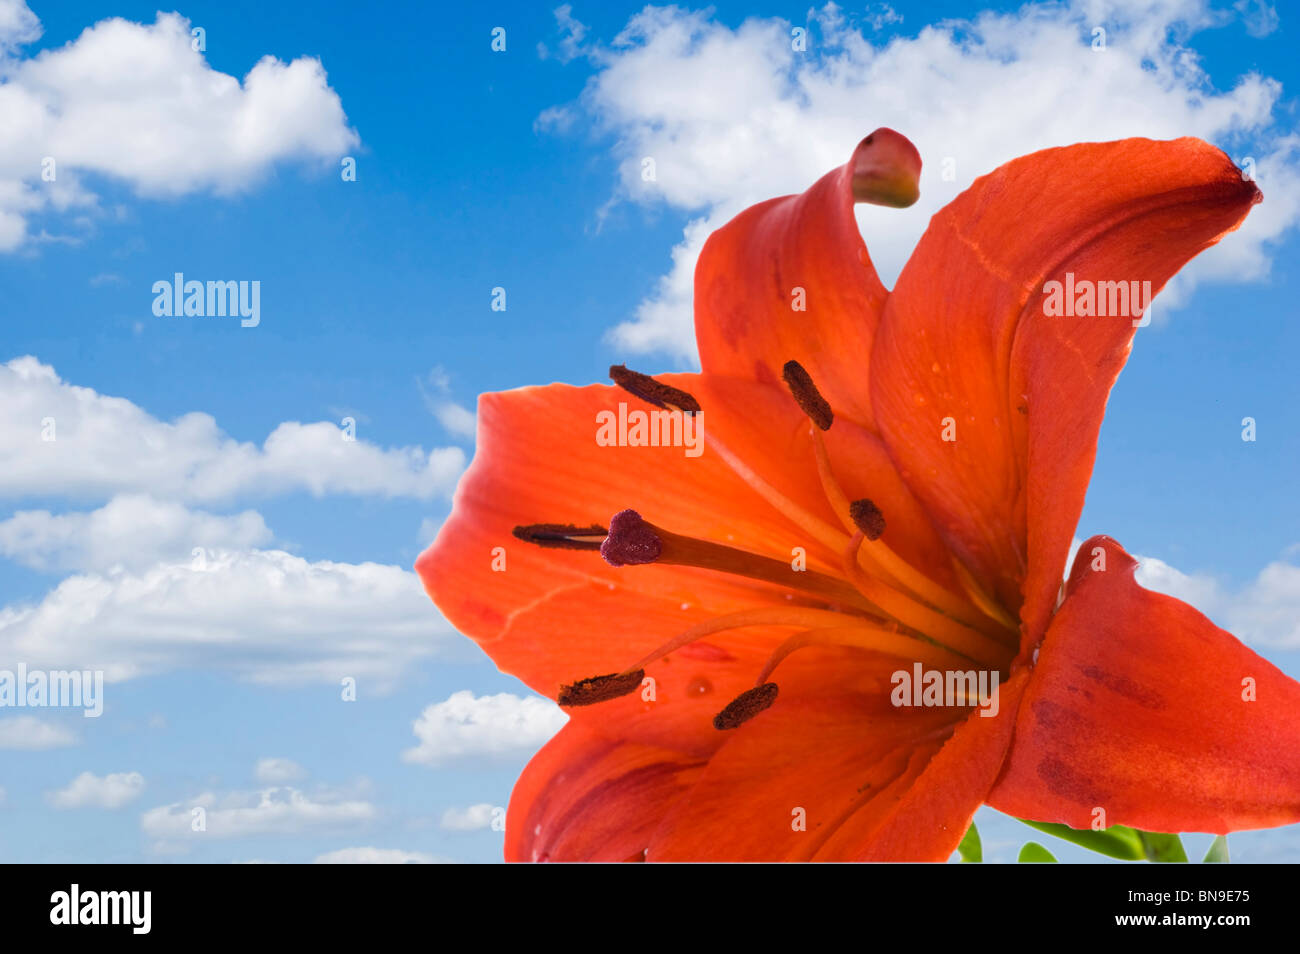 Objekt auf blauem Himmel - Blumen Lilie hautnah Stockfoto